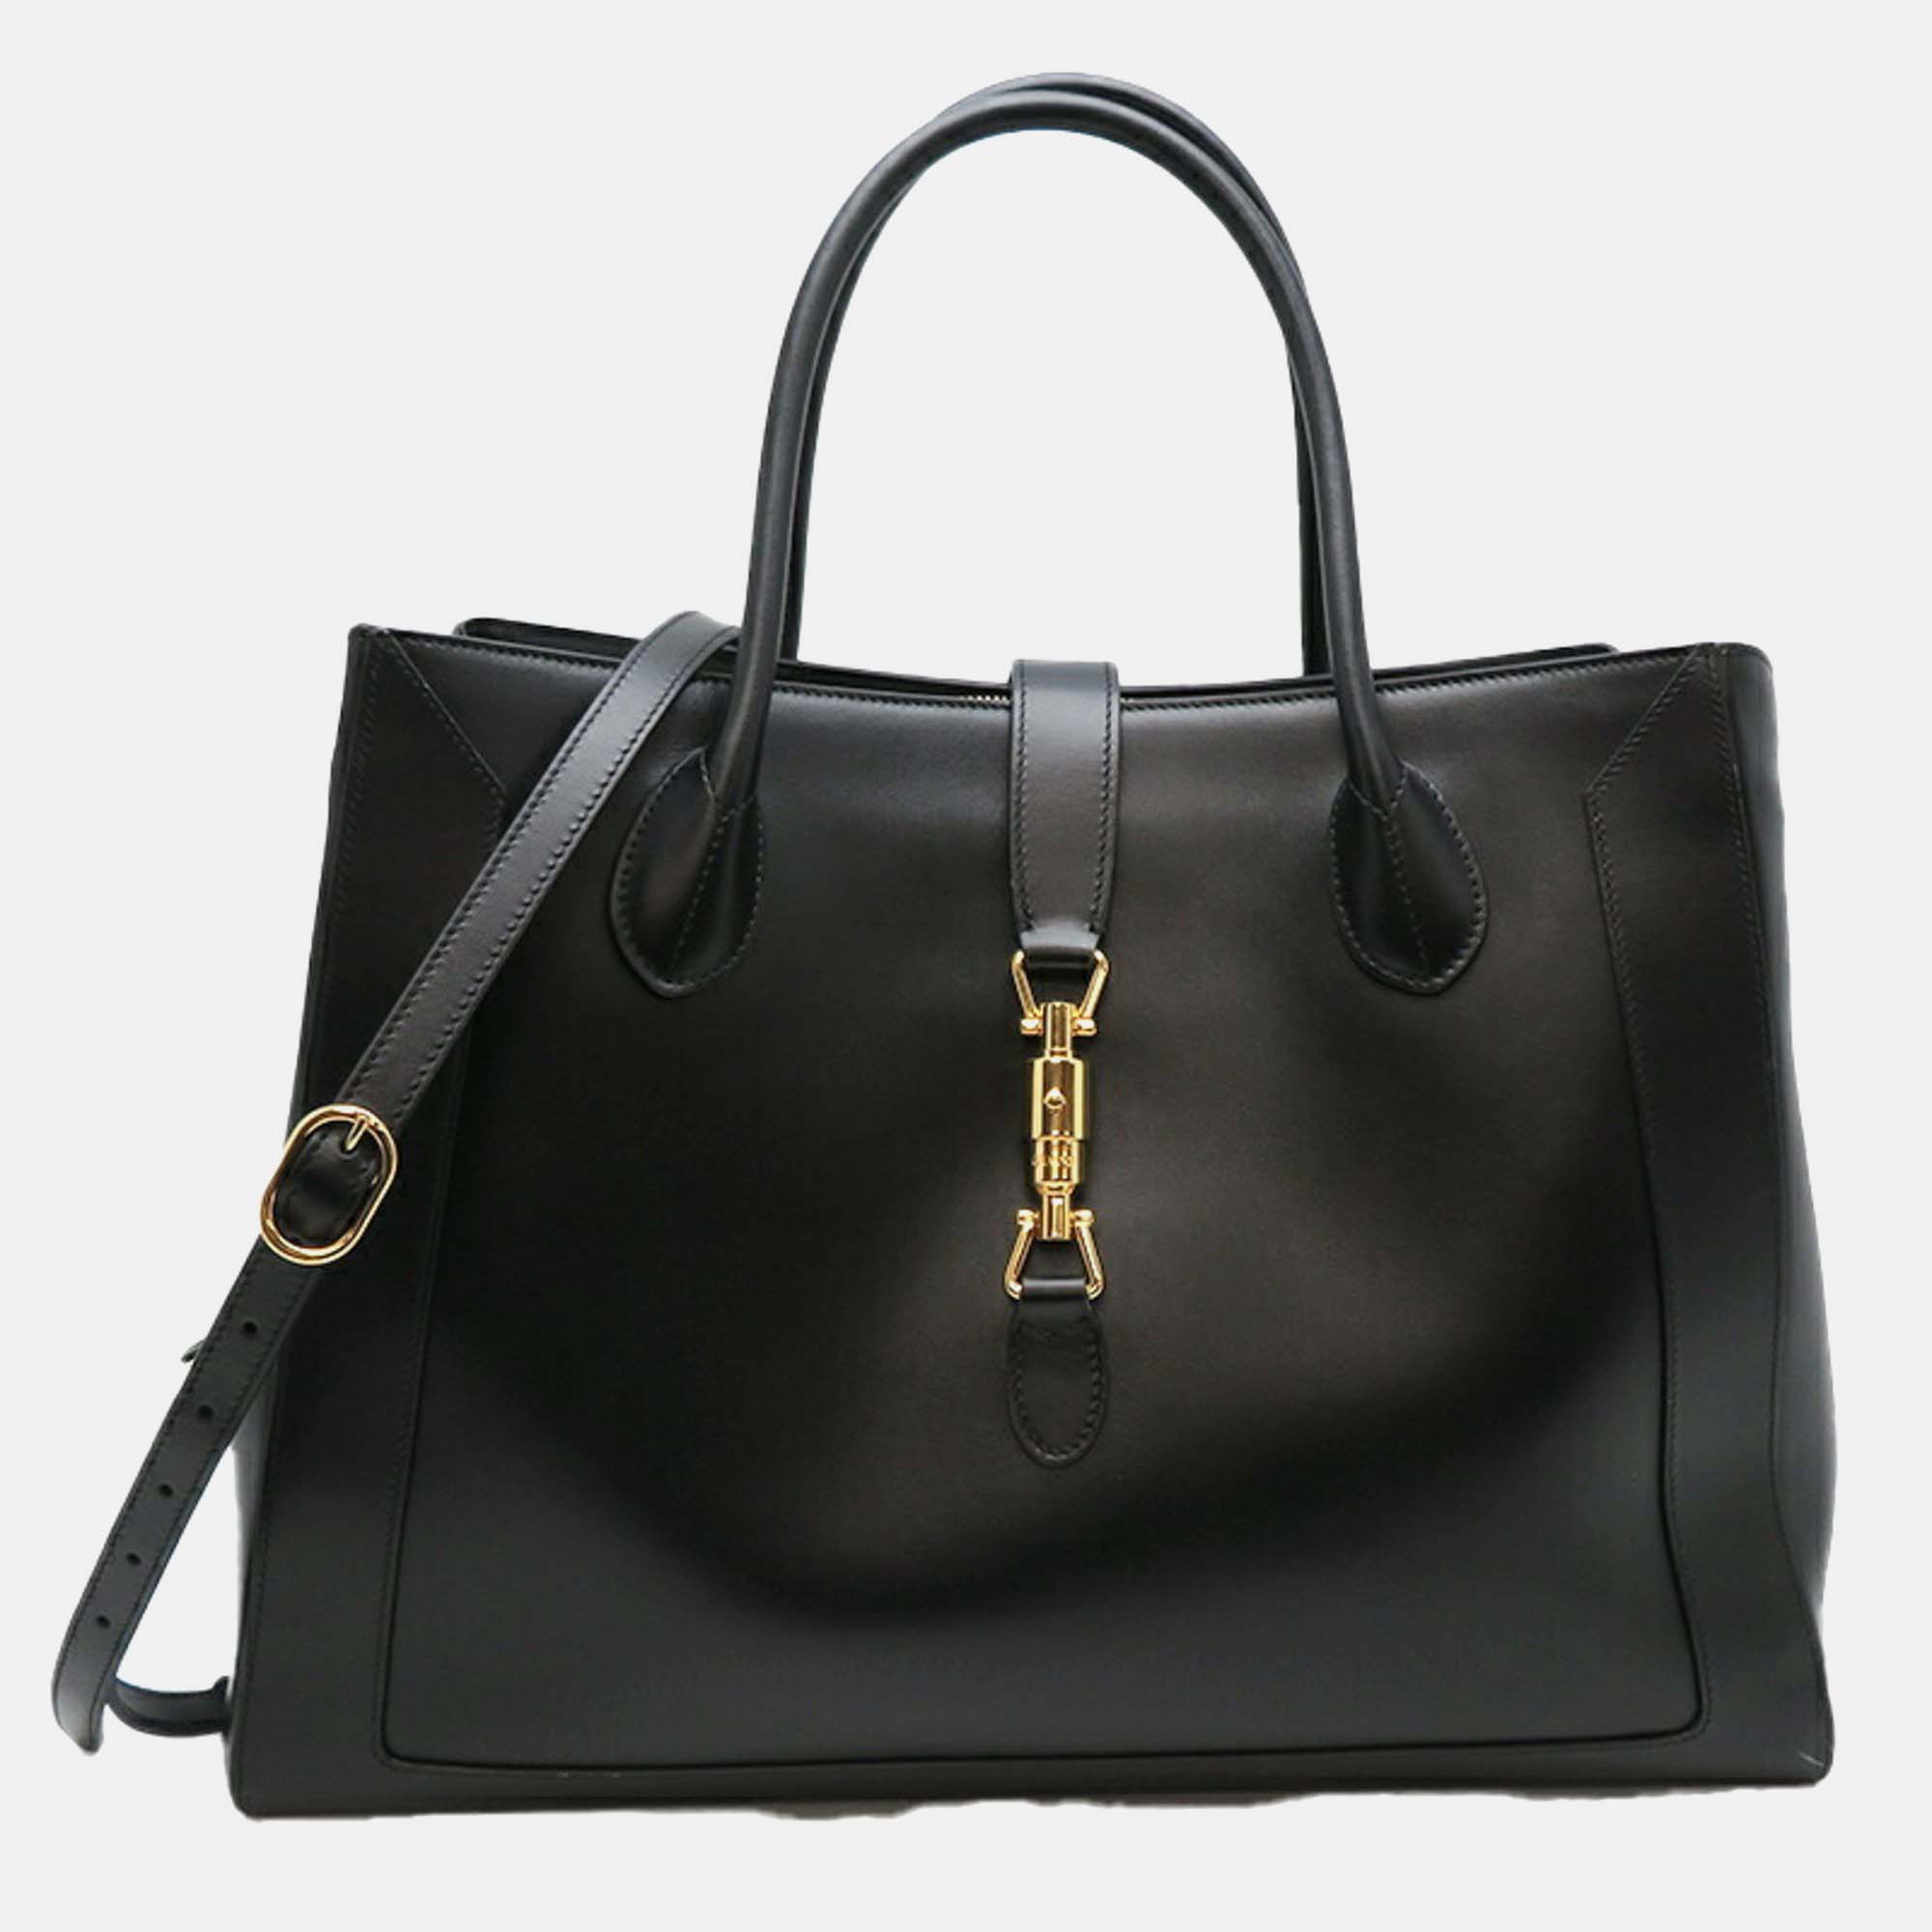 Gucci black leather jackie 1961 handbag